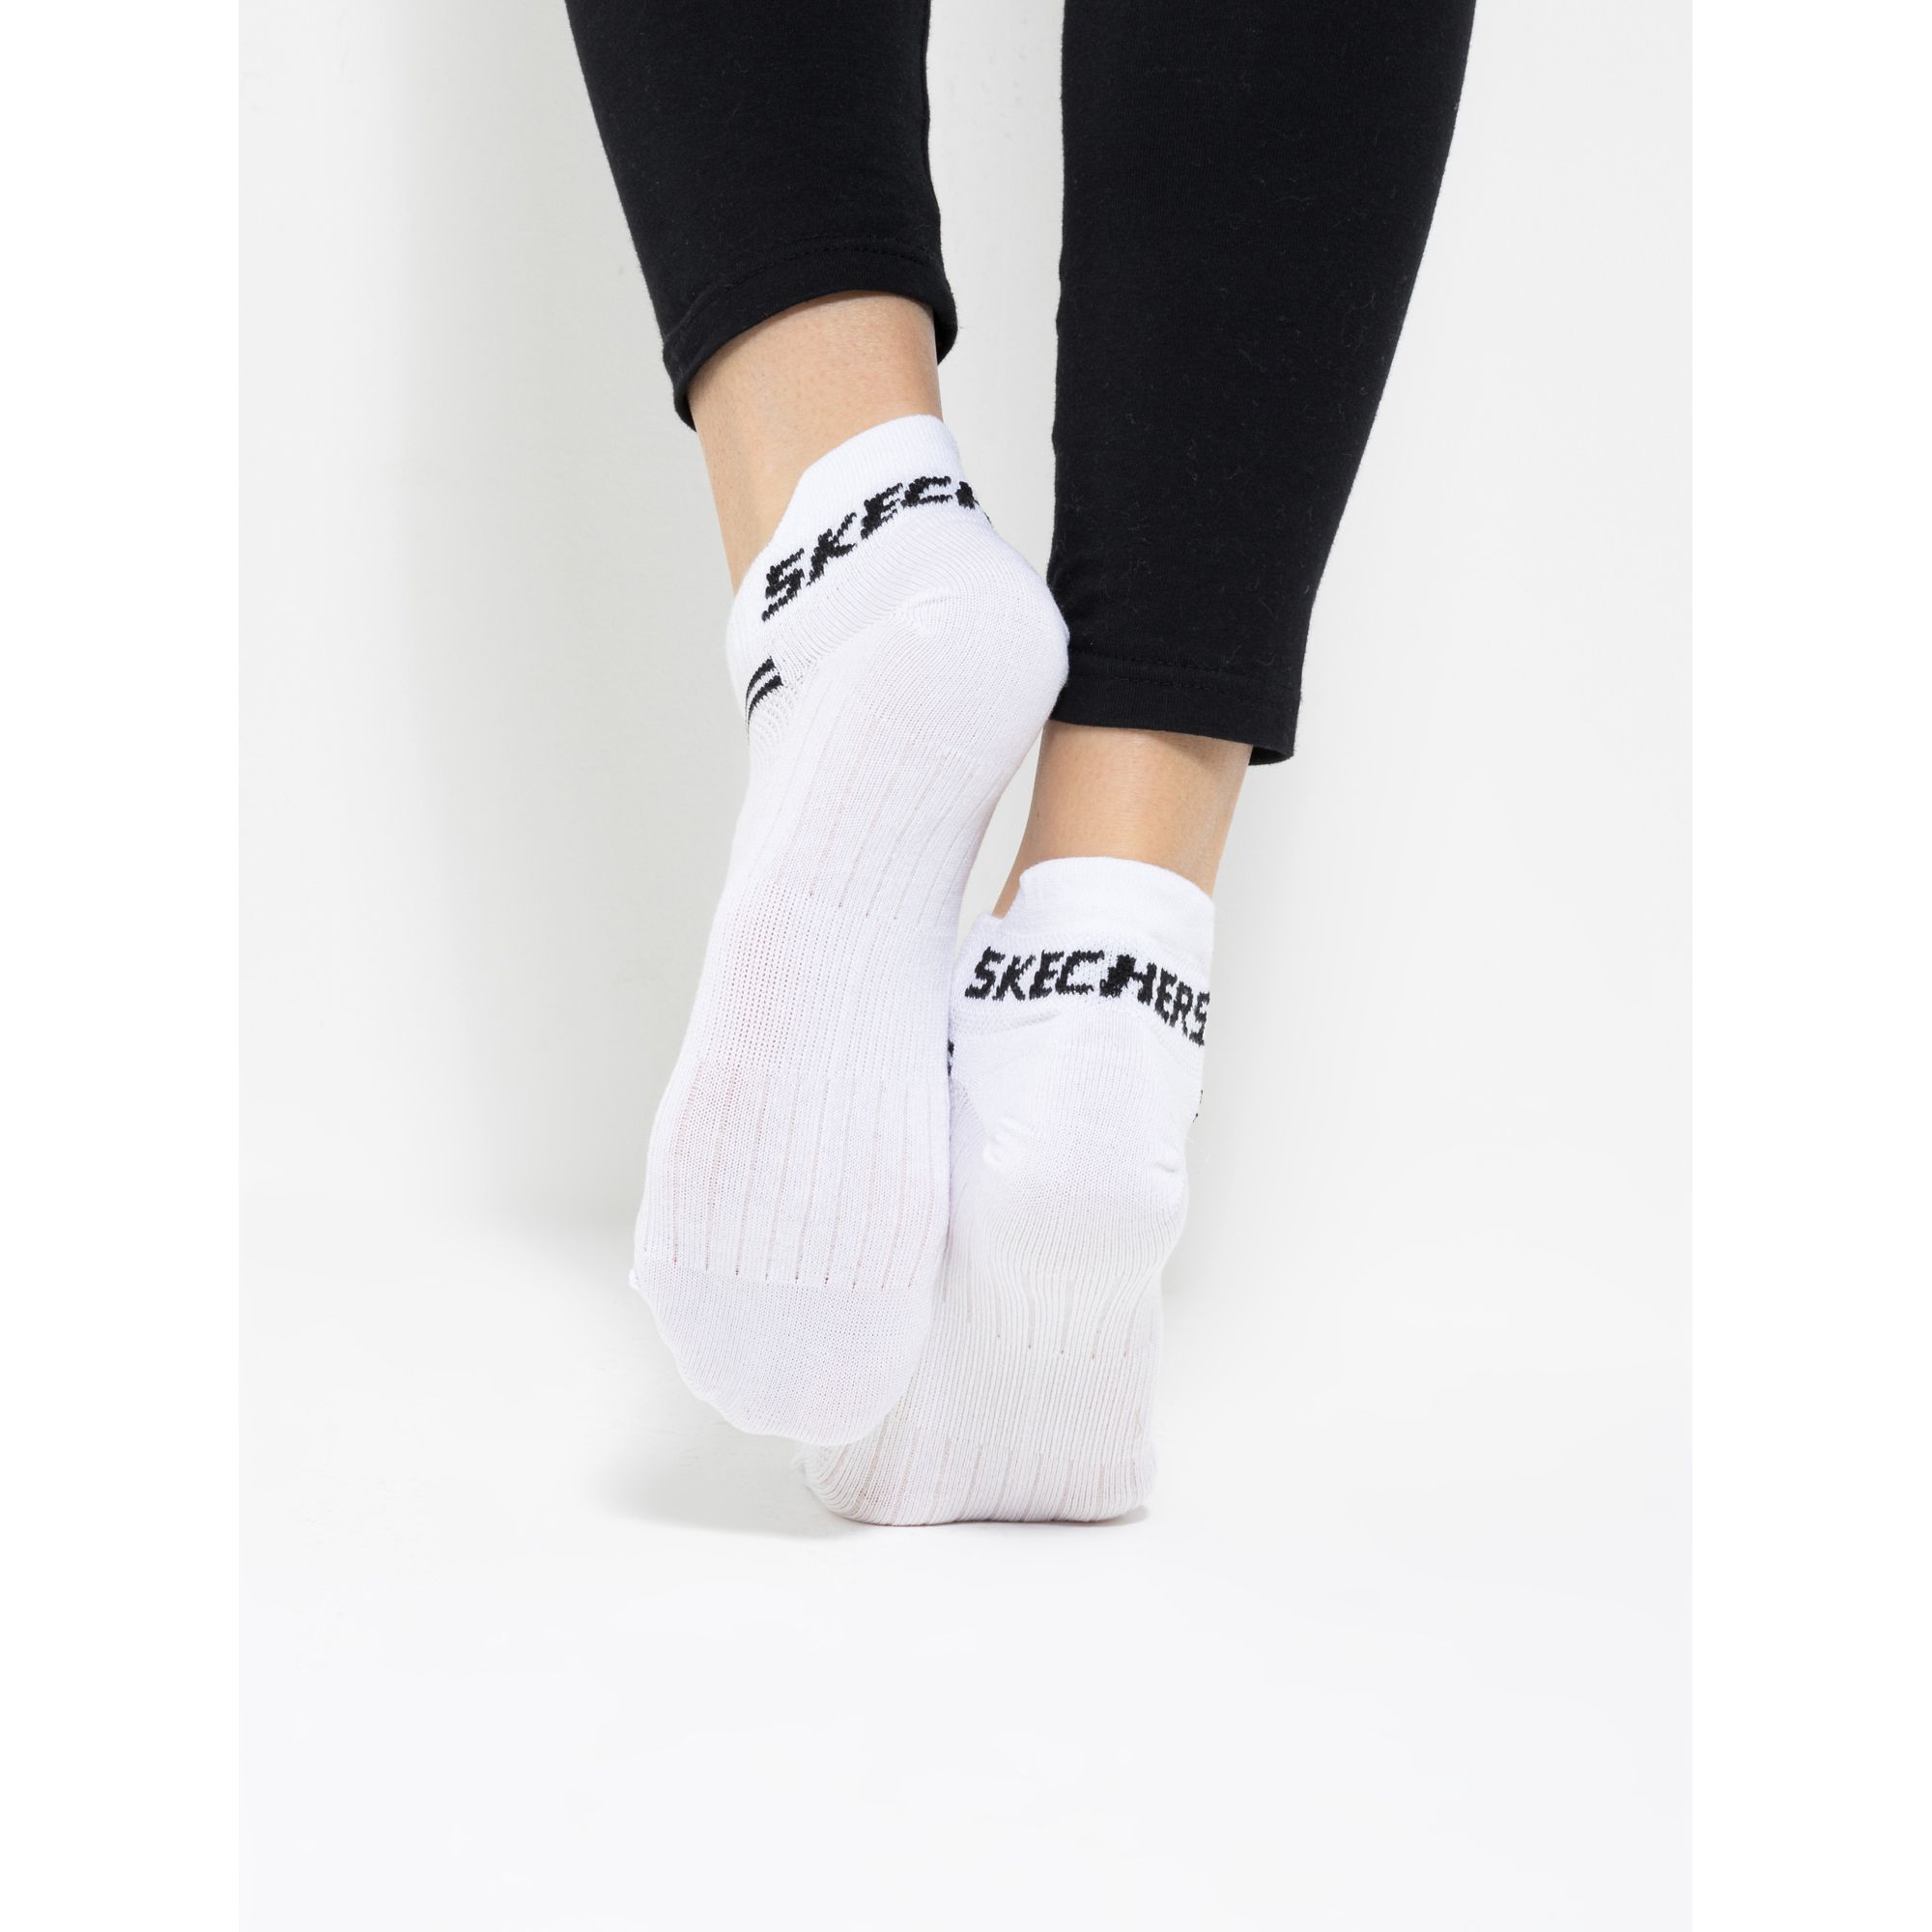 Sonderangebotskatalog SKECHERS Unisex Sneaker- Socken Anti-Slip Paar 4